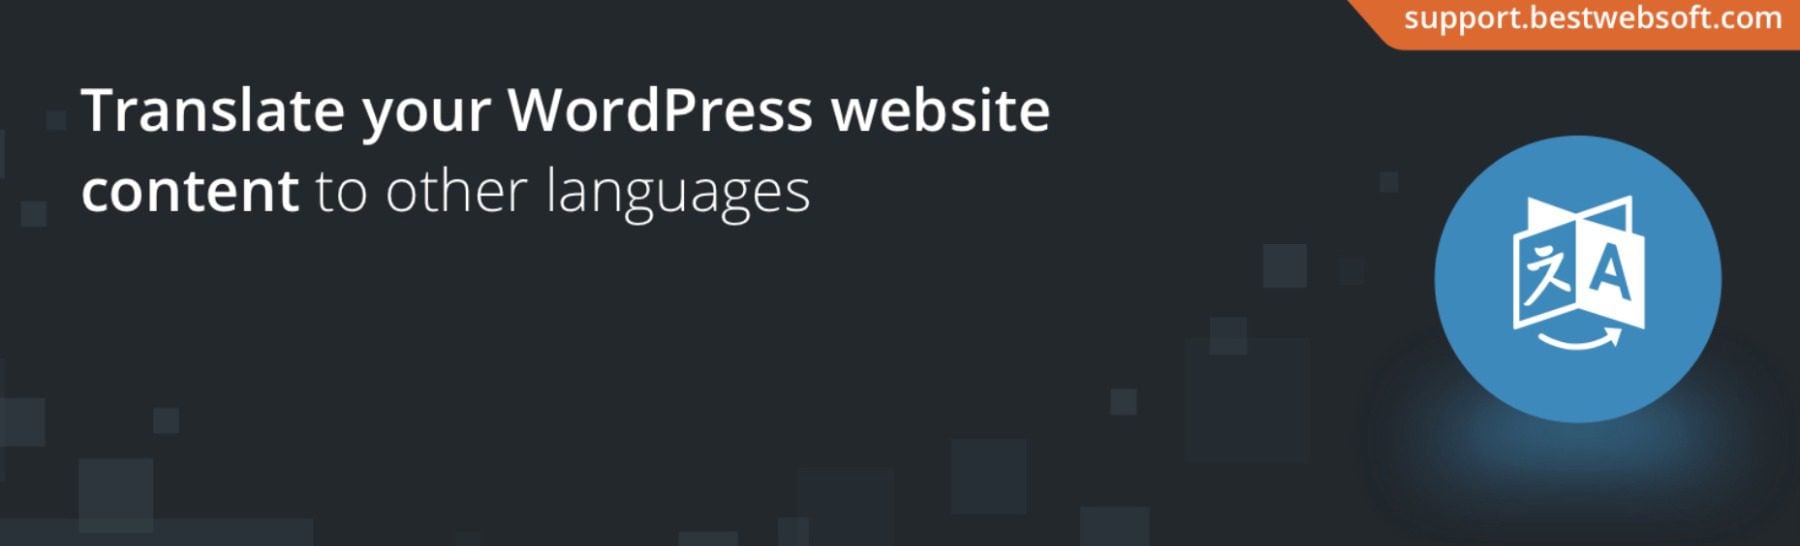 multilanguage wordpress translation plugin by bestwebsoft